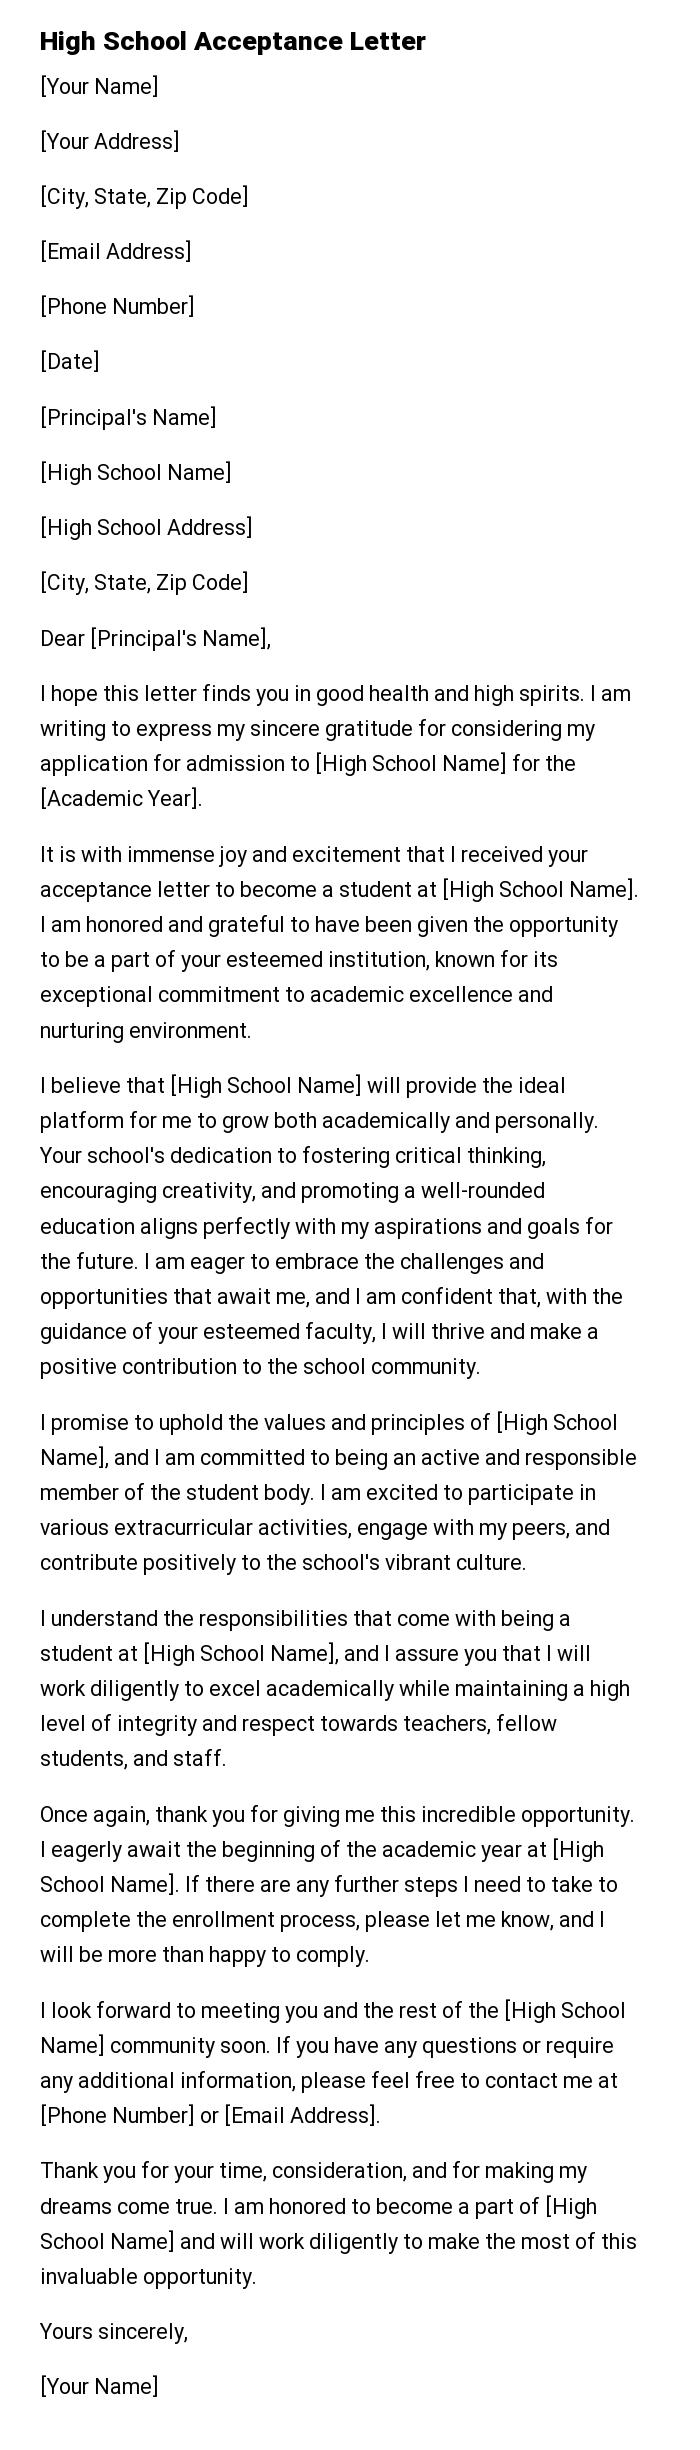 High School Acceptance Letter